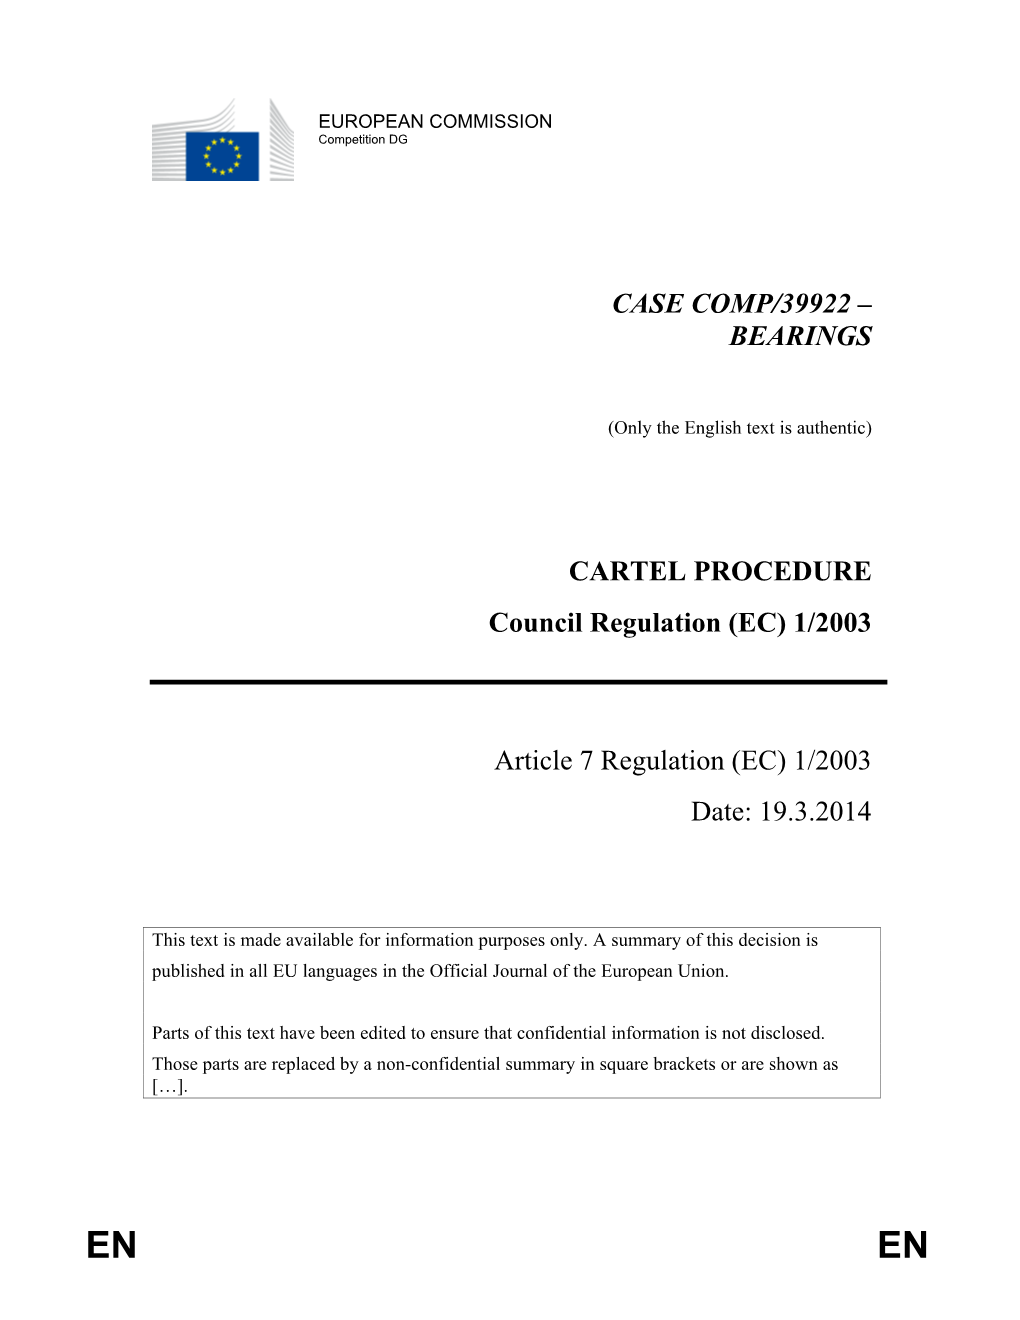 BEARINGS CARTEL PROCEDURE Council Regulation (EC)